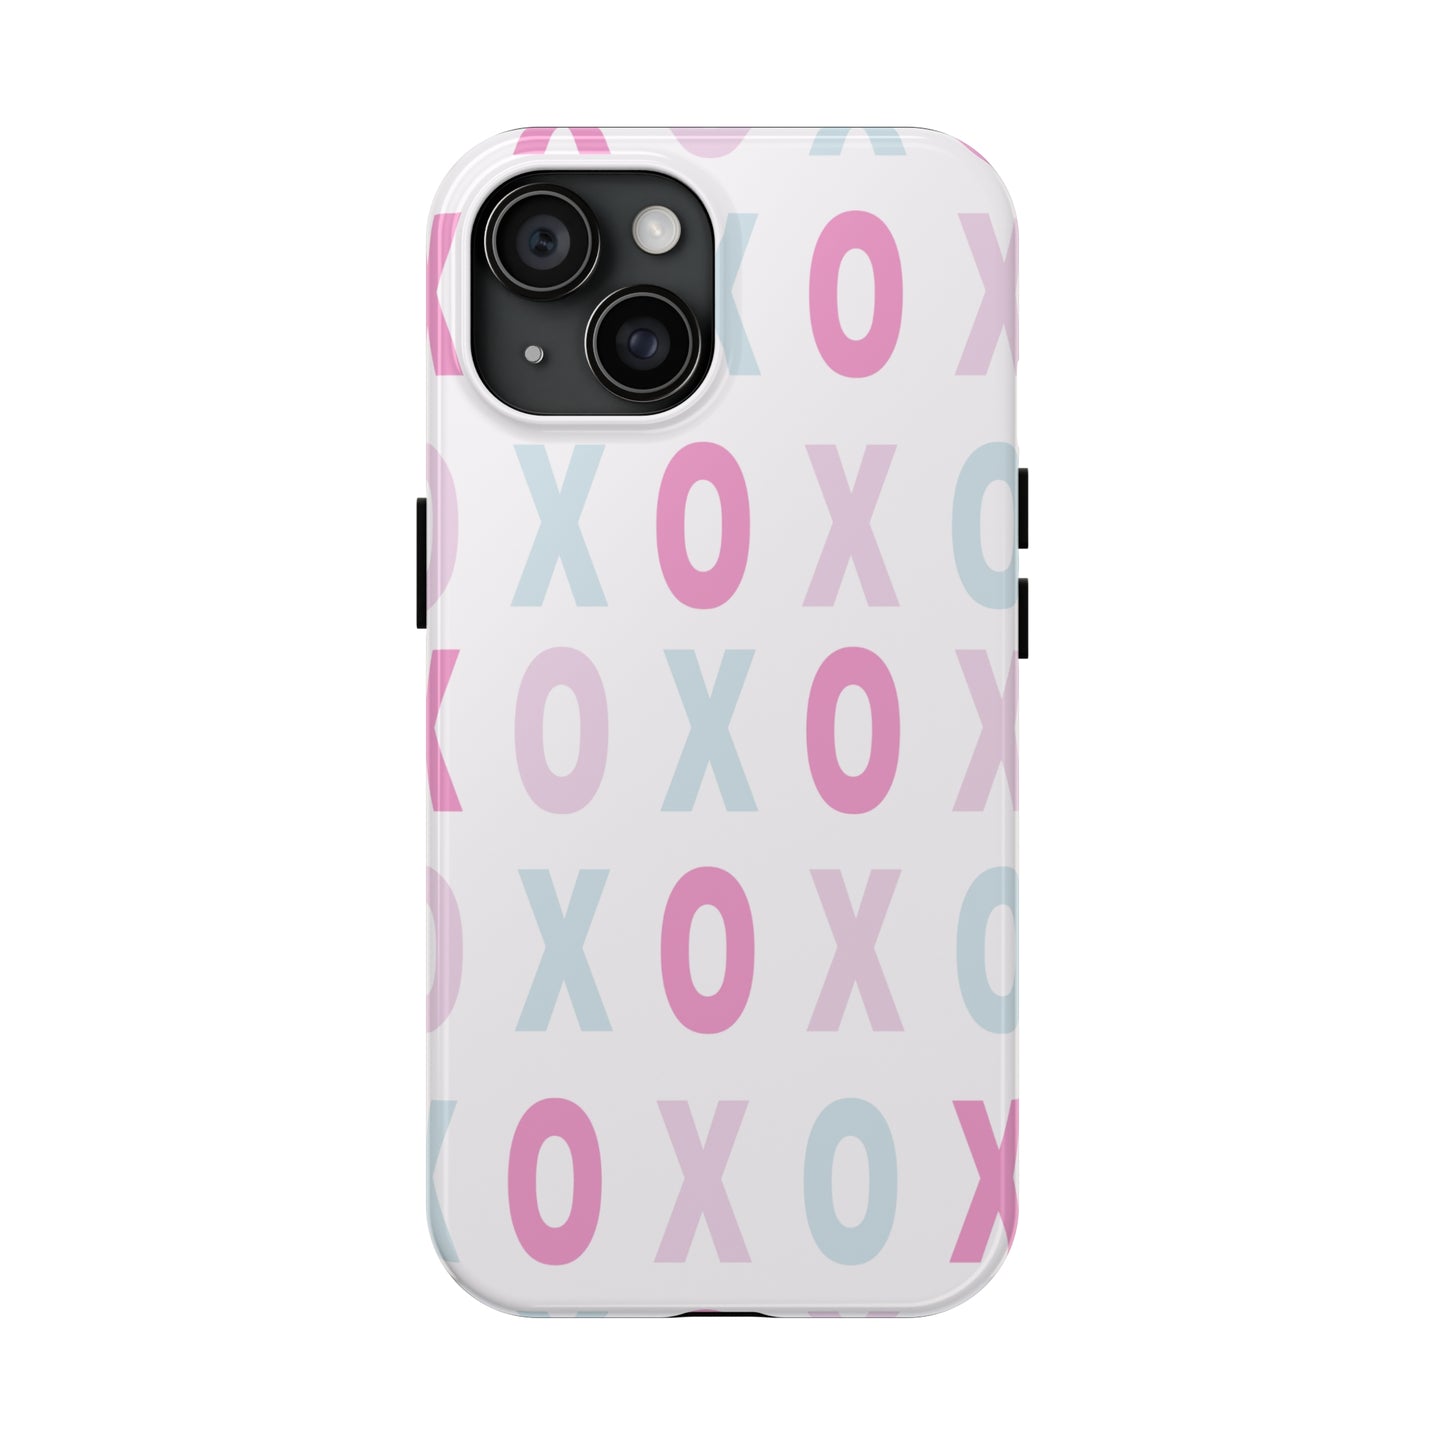 XOXO Phone Case